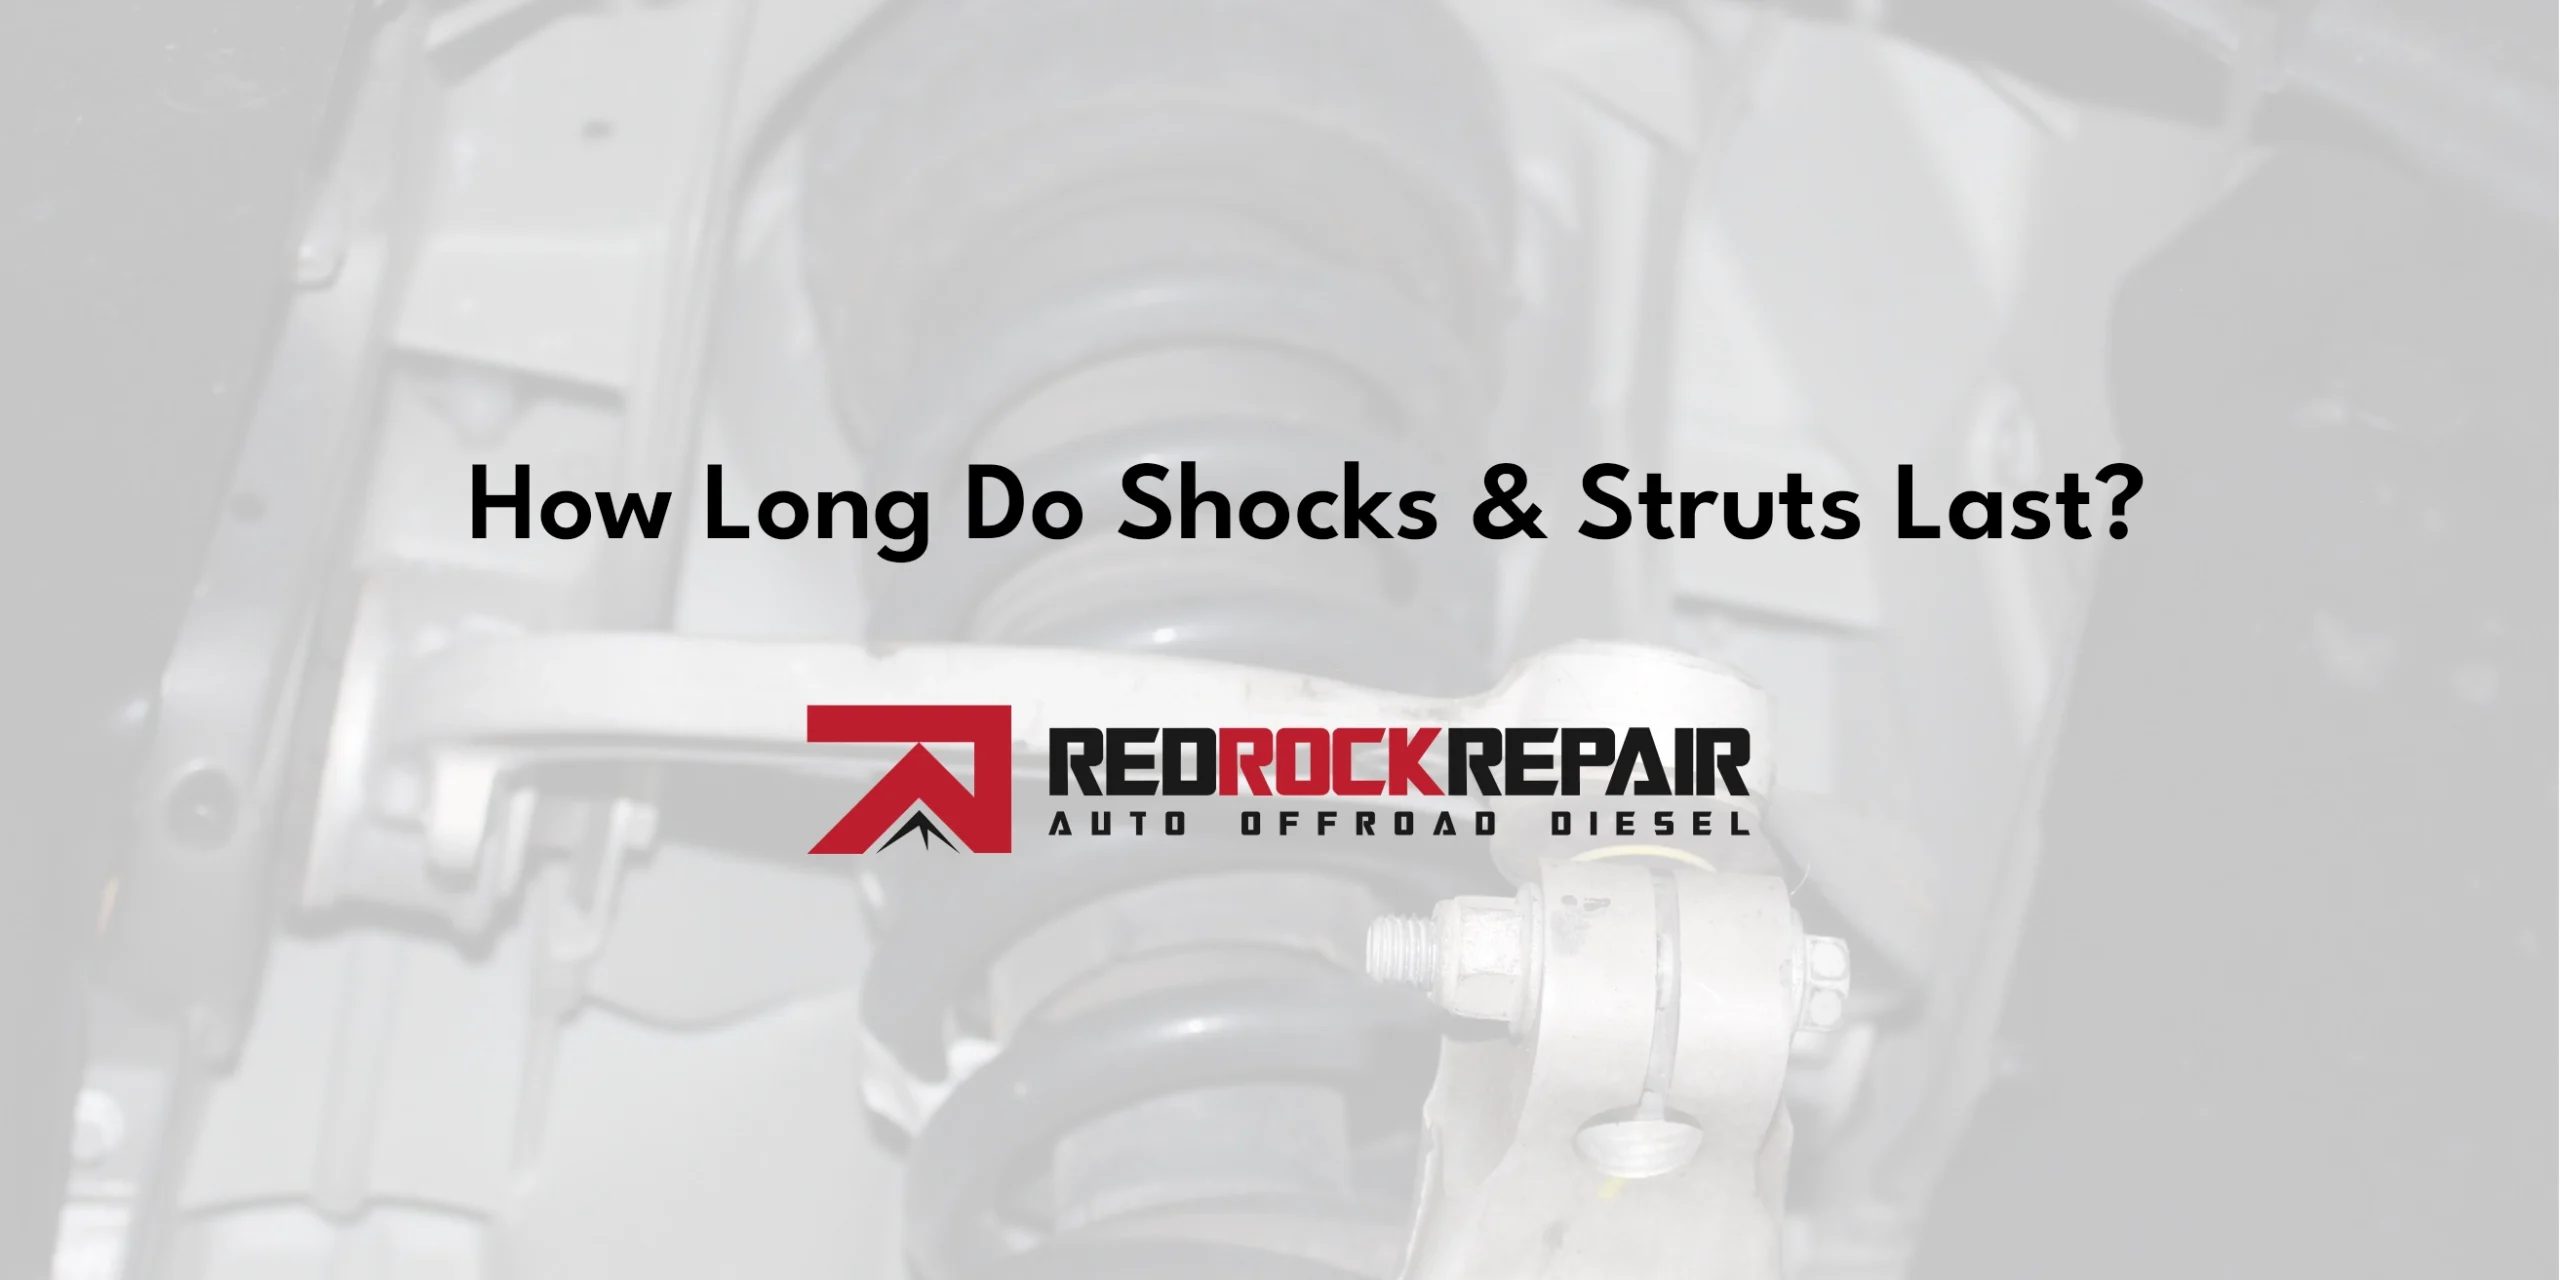 How Long Do Shocks & Struts Last?